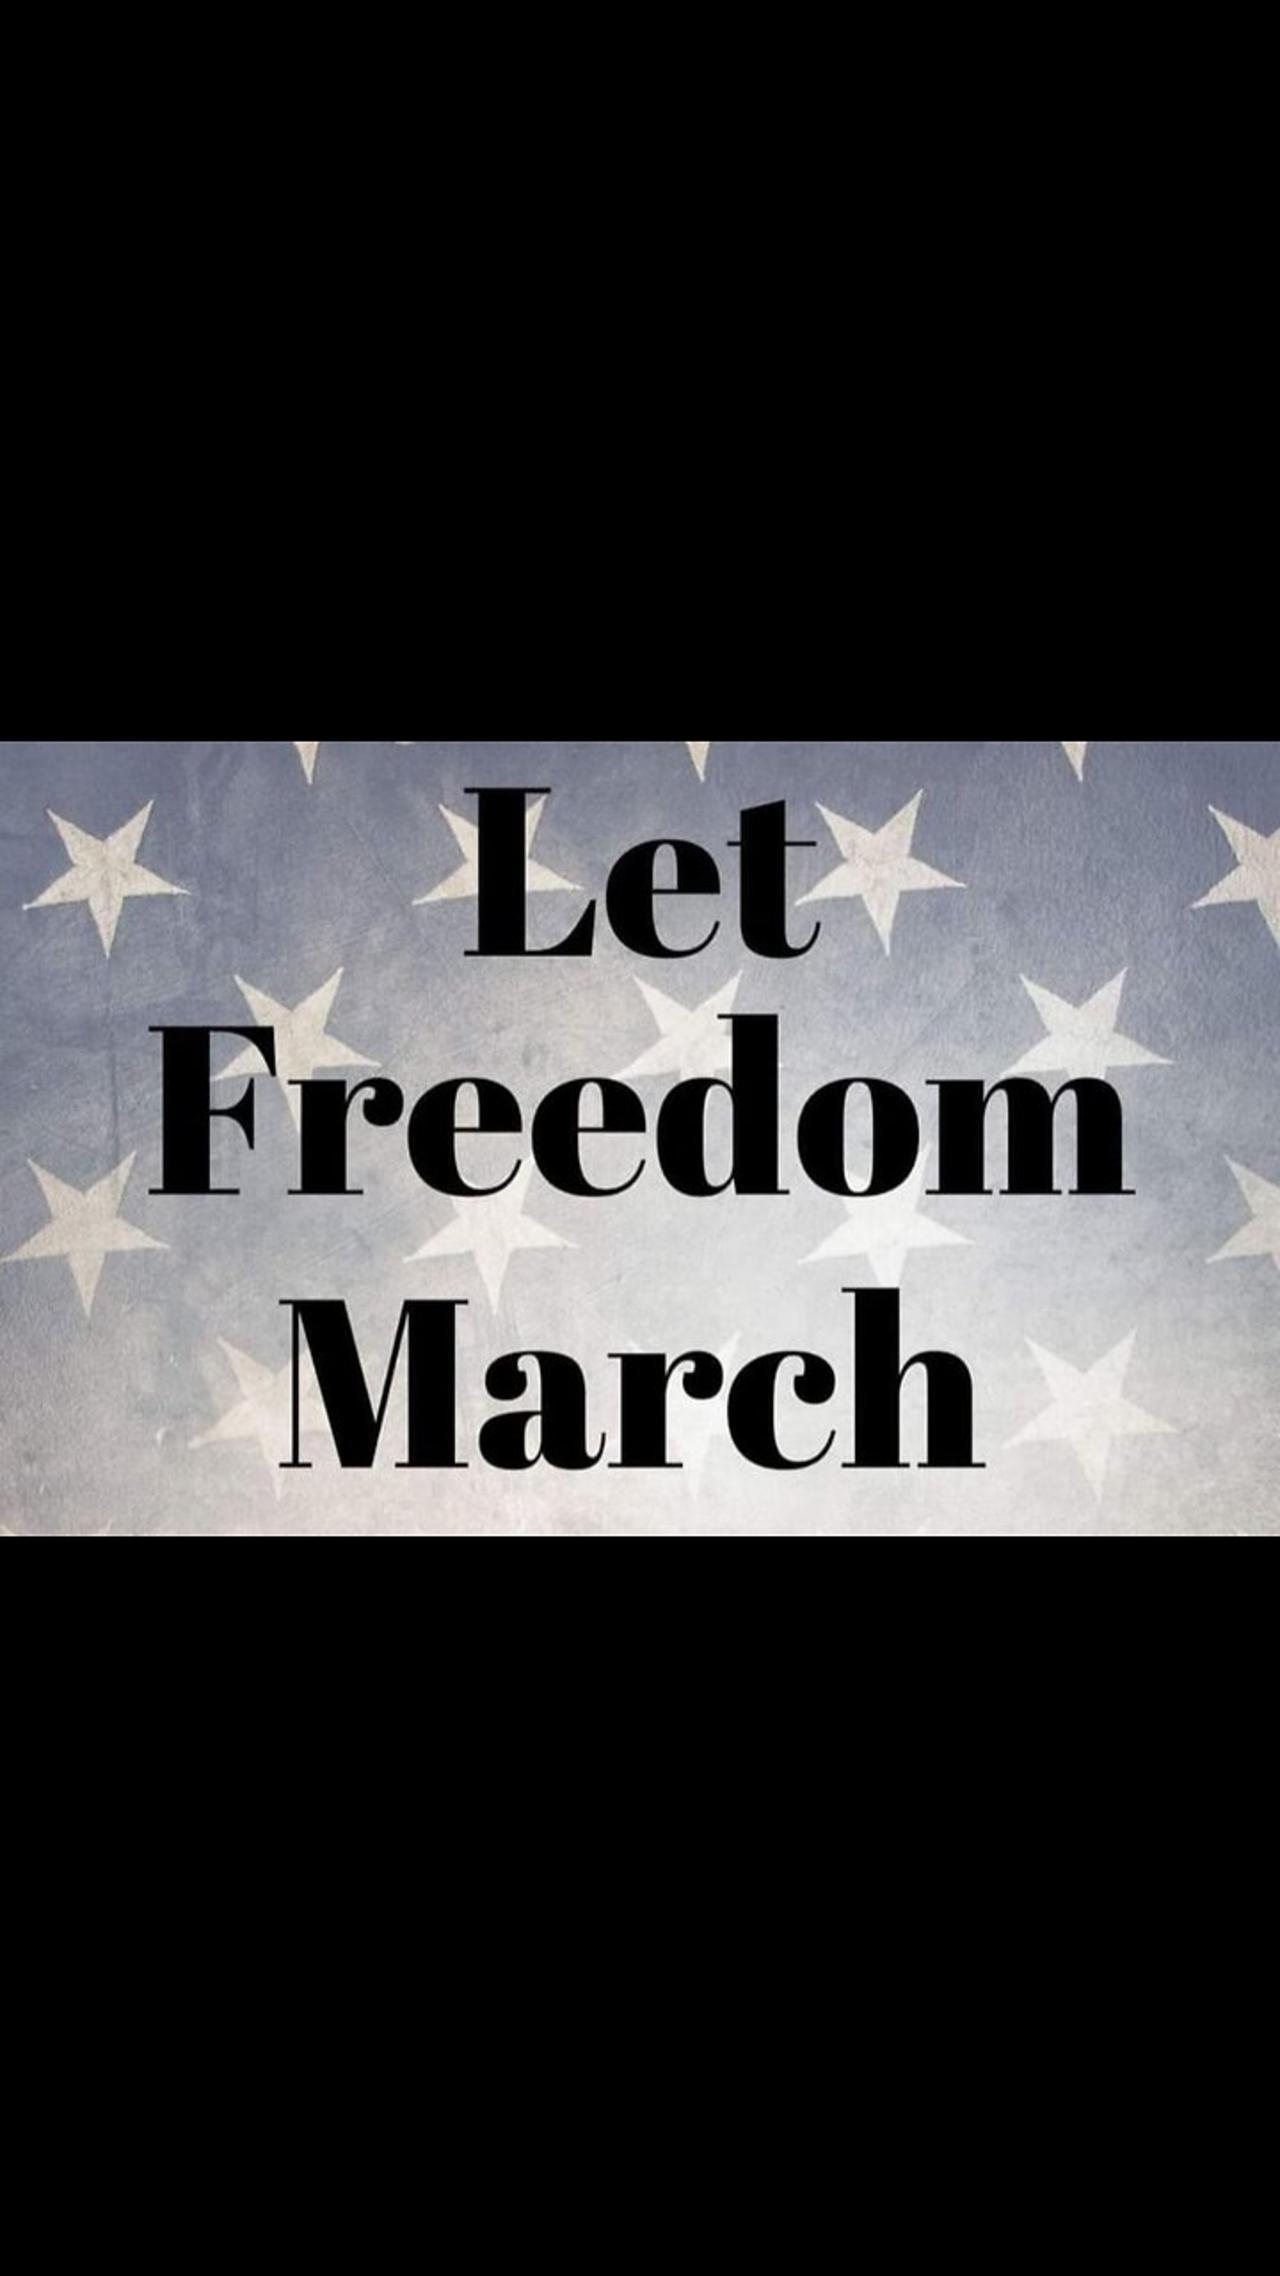 Let Freedom March | Salem, Oregon #freedom #114 #election #vote #oregon